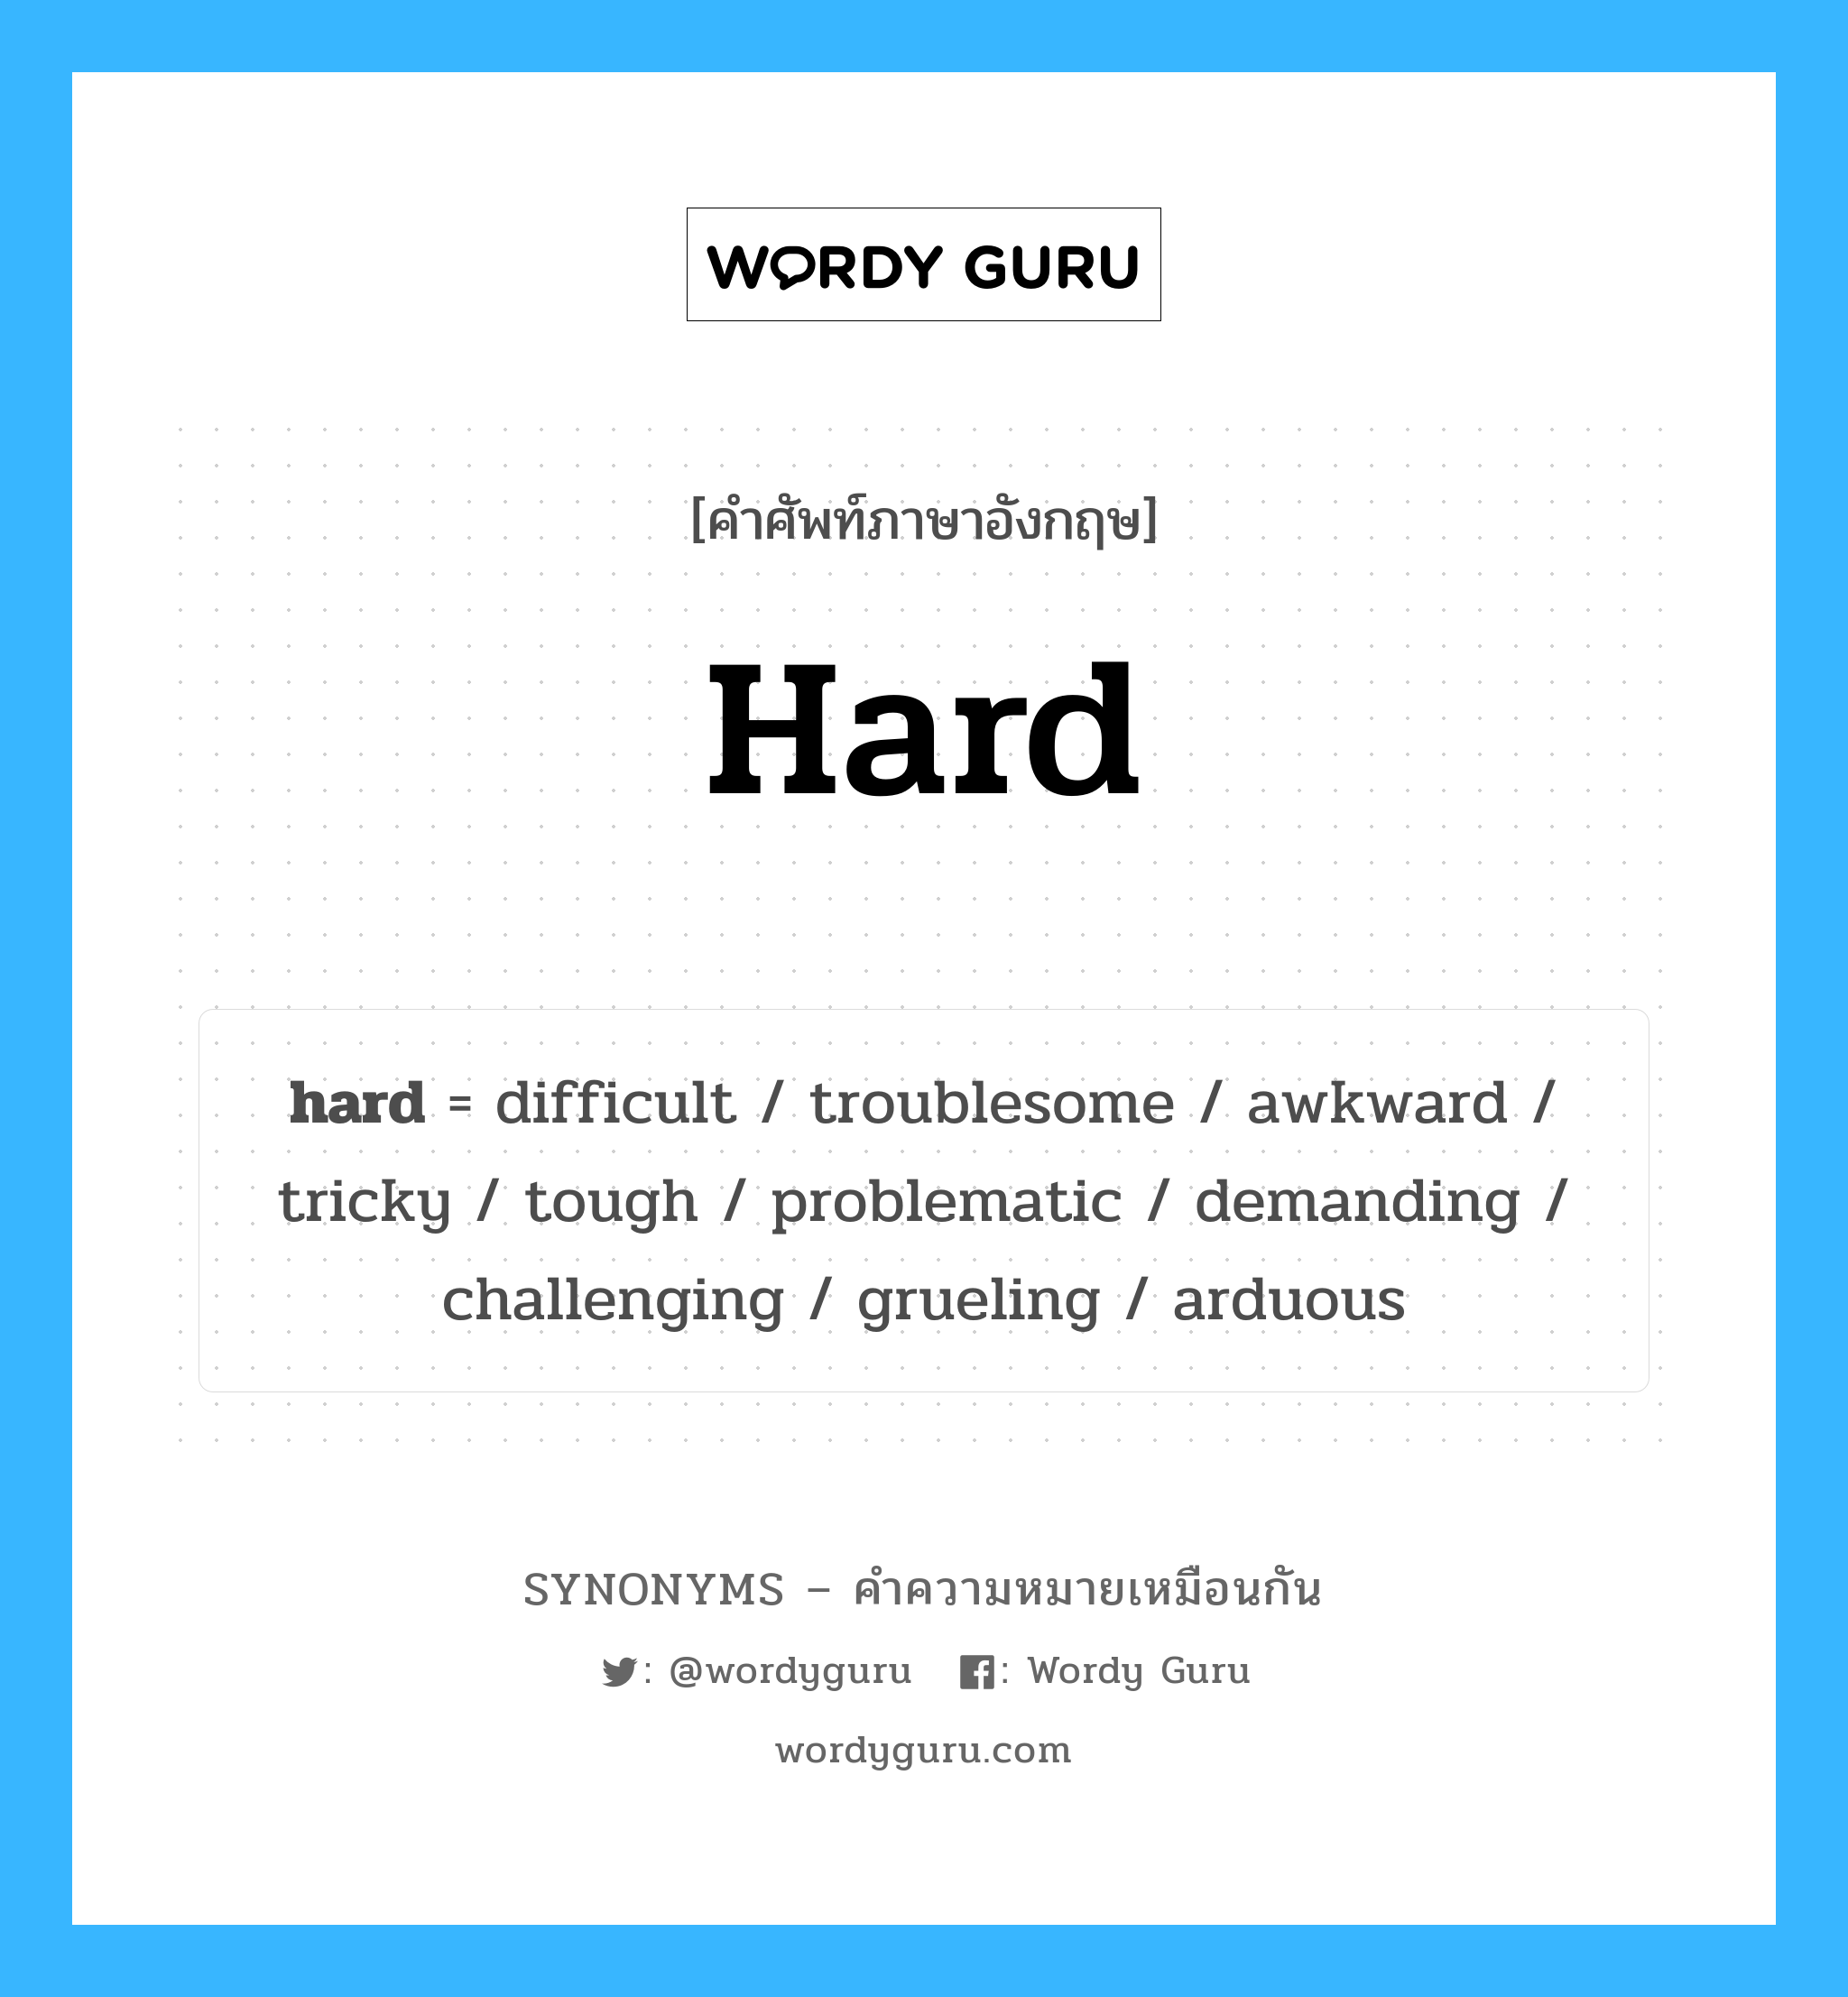 demanding เป็นหนึ่งใน hard และมีคำอื่น ๆ อีกดังนี้, คำศัพท์ภาษาอังกฤษ demanding ความหมายคล้ายกันกับ hard แปลว่า ความต้องการ หมวด hard